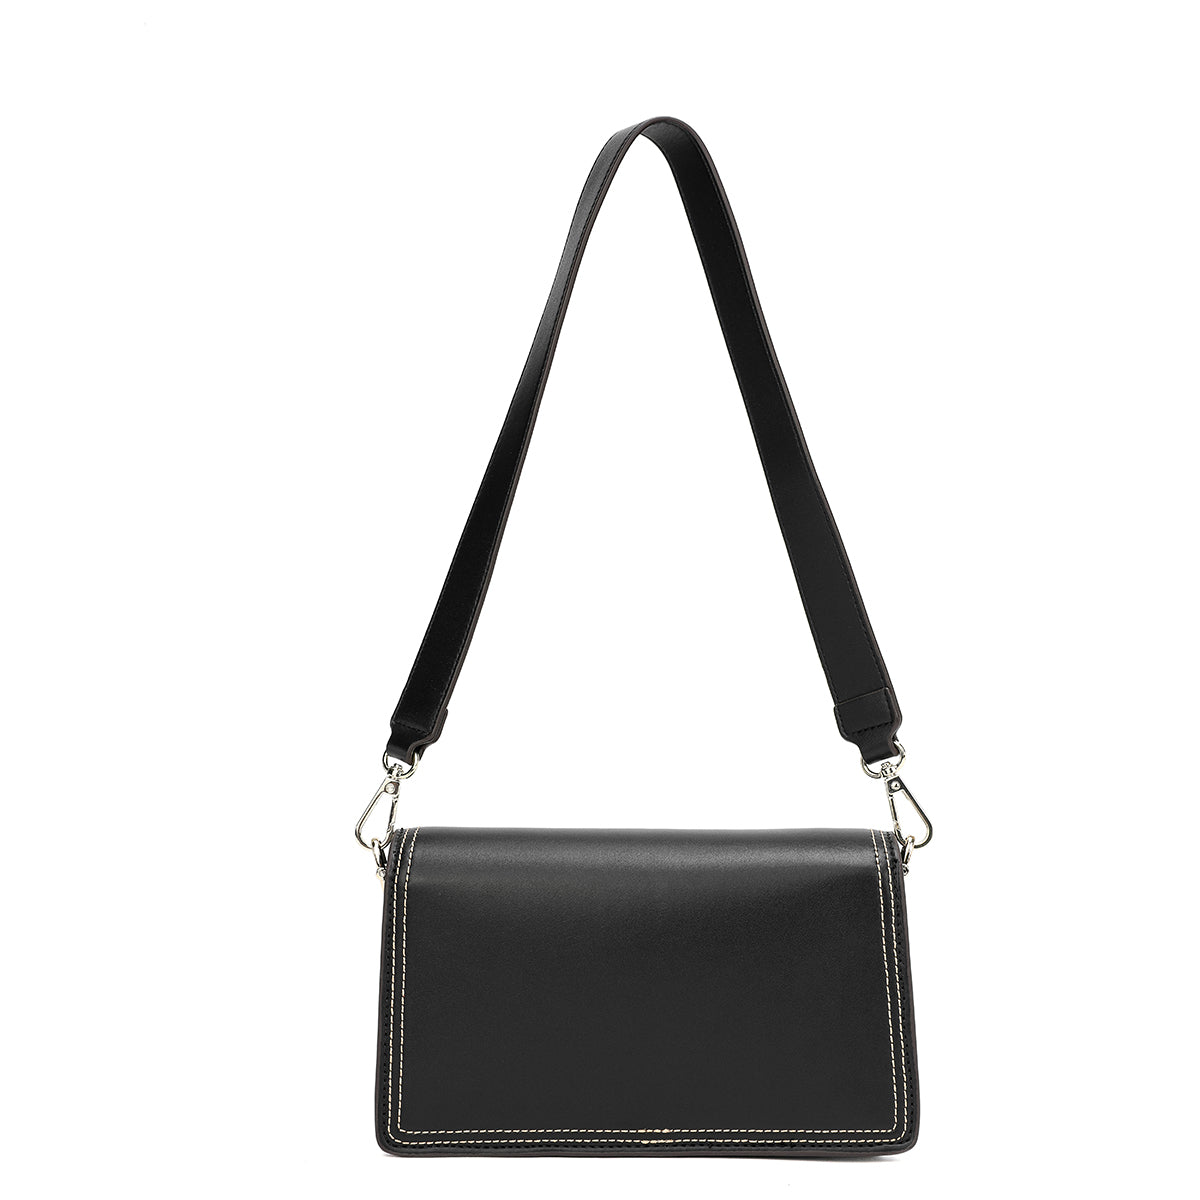 Lightweight and unique handbag